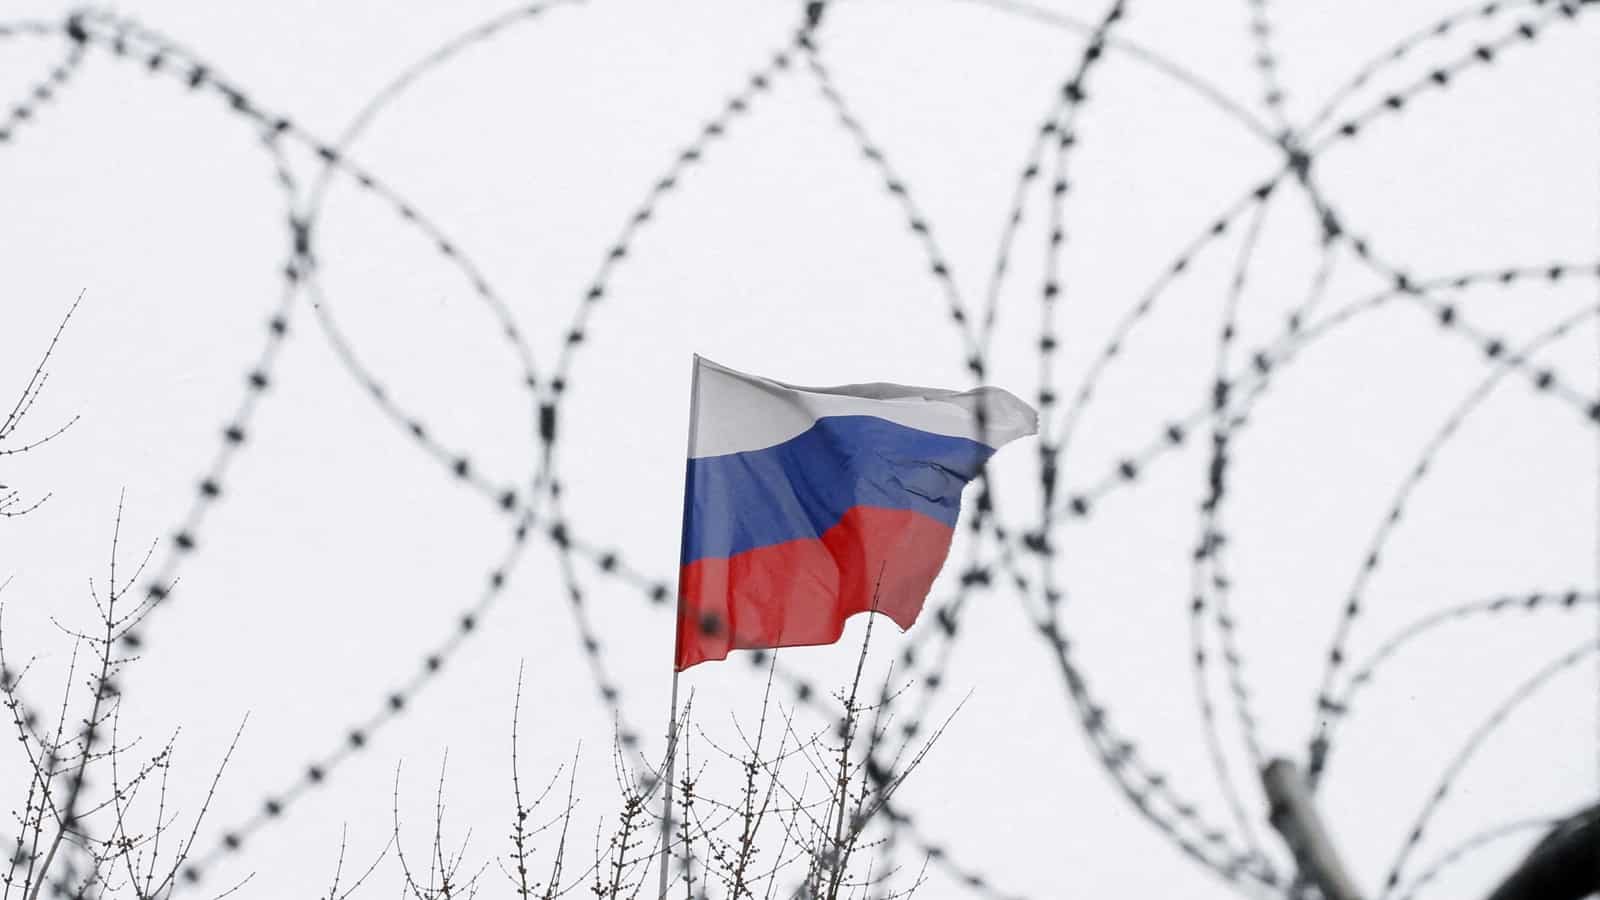 Financial crimes watchdog FATF suspends Russia’s membership over Ukraine war | World News